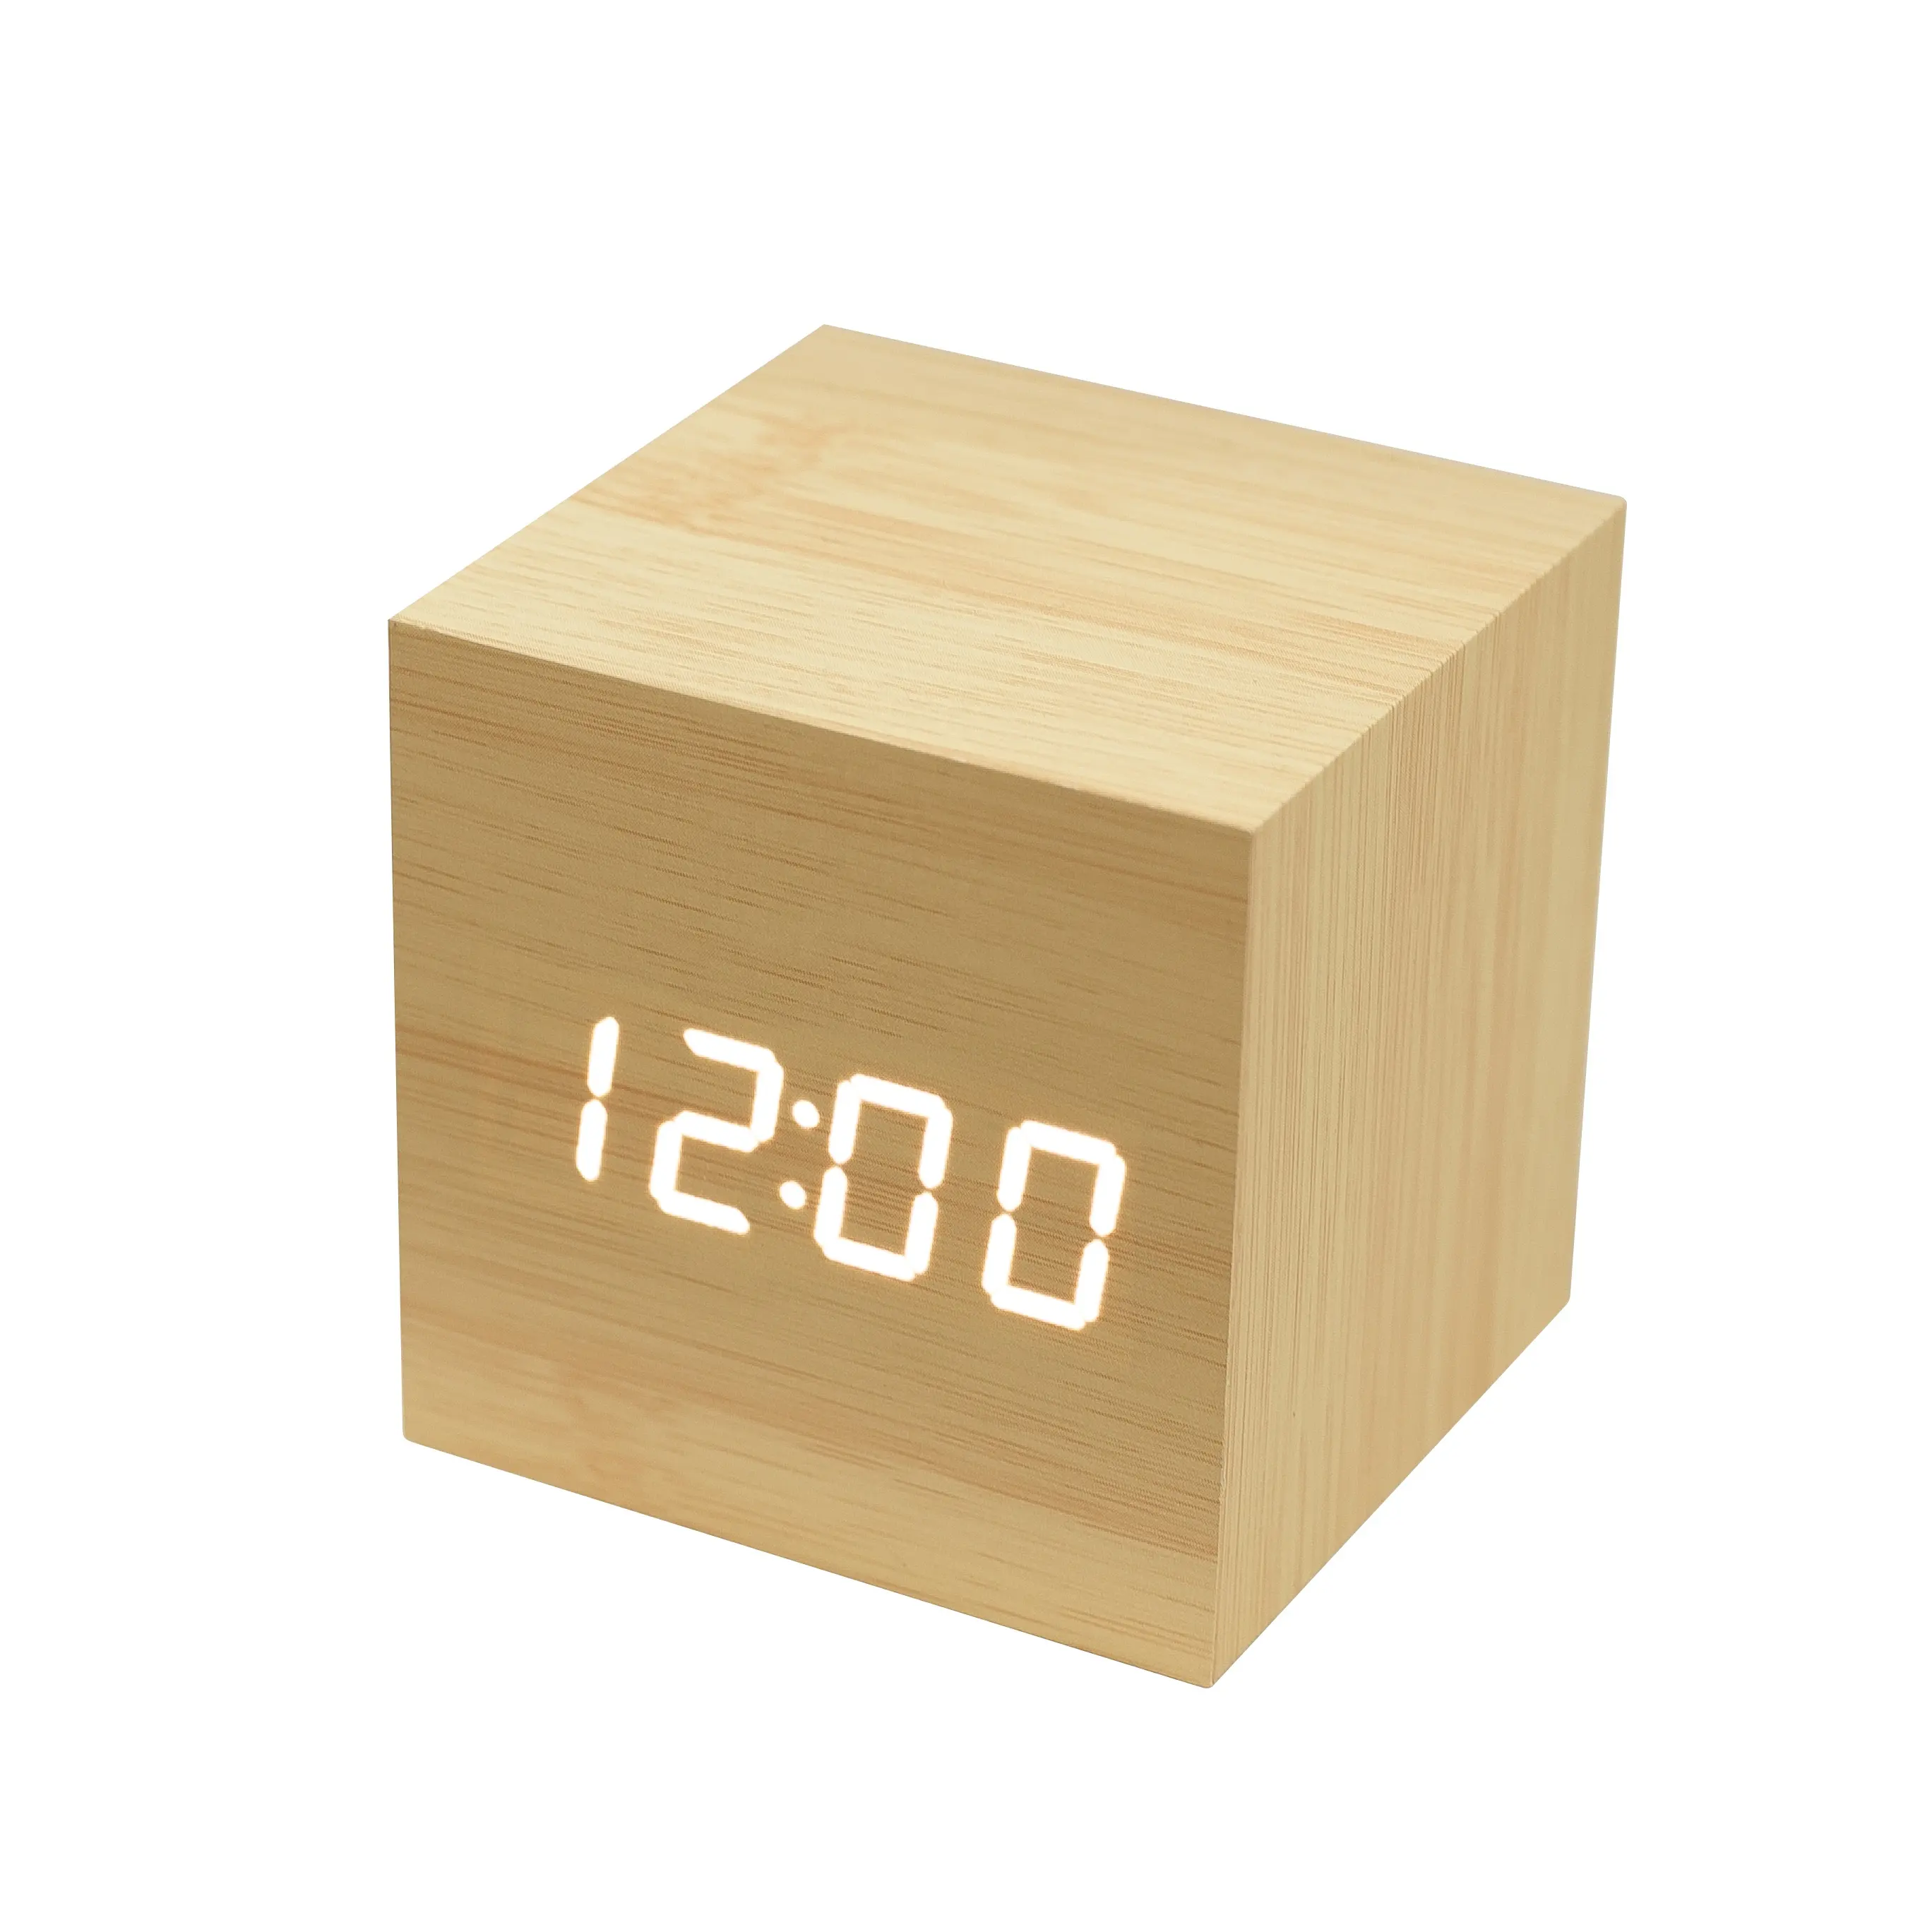 Evertop Popular Mini Wood LED Alarm Clock Digital Cube Best Gift Travel Choice Home Bedroom Decoration Wooden Alarm Clock